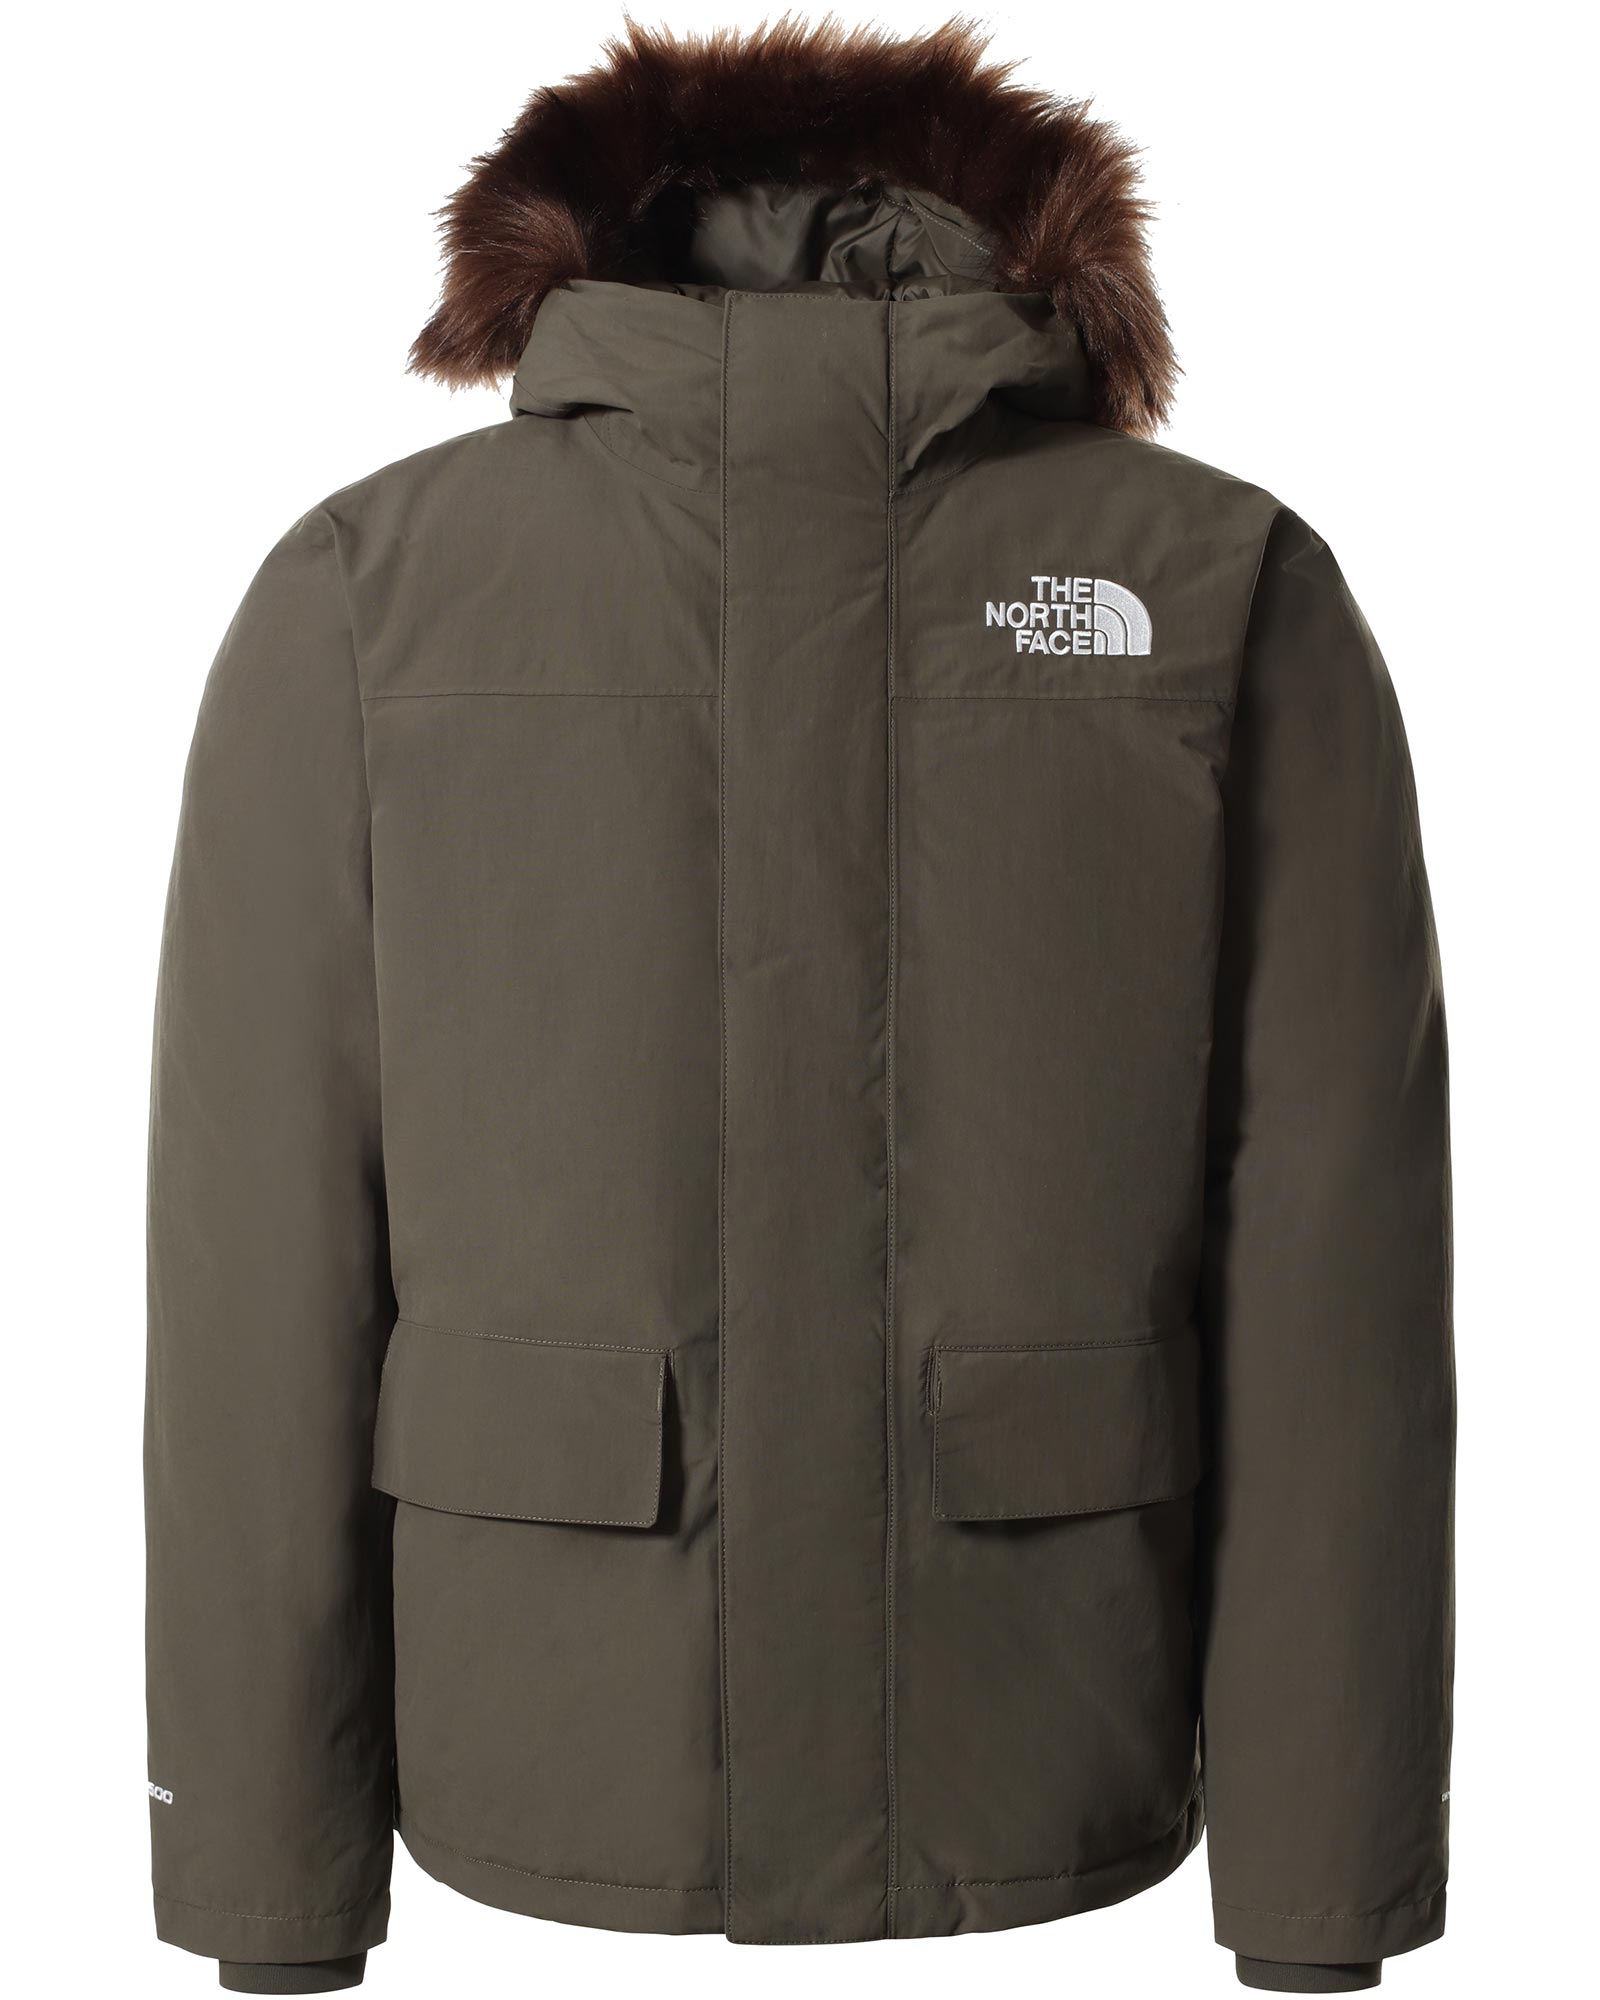 The North Face Arctic Mens Parka Jacket